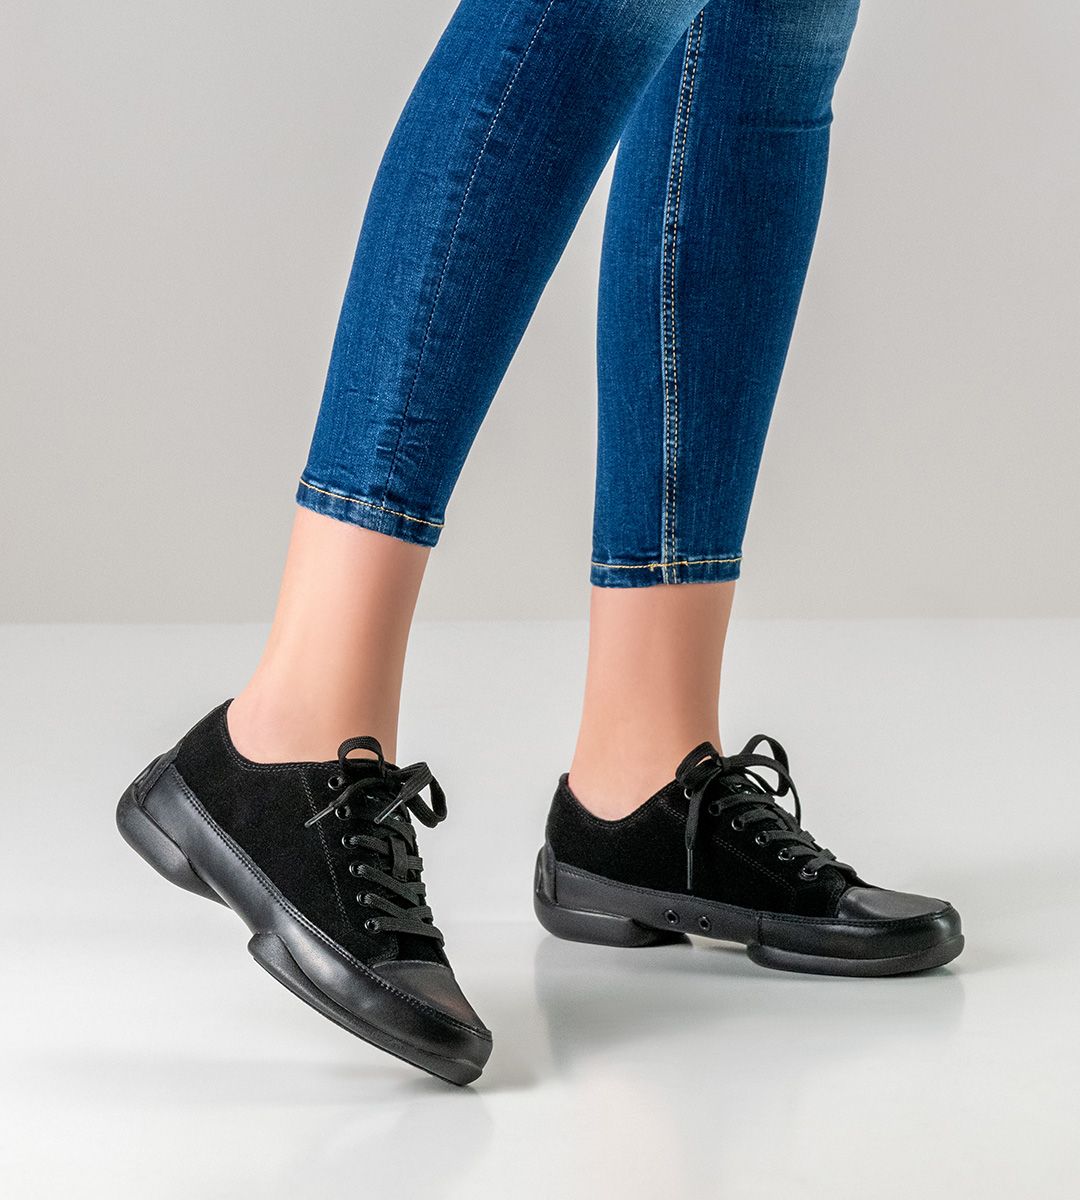 Ladies Dance Practice Sneakers in Black Suede with Flexible PU Sole and Heel